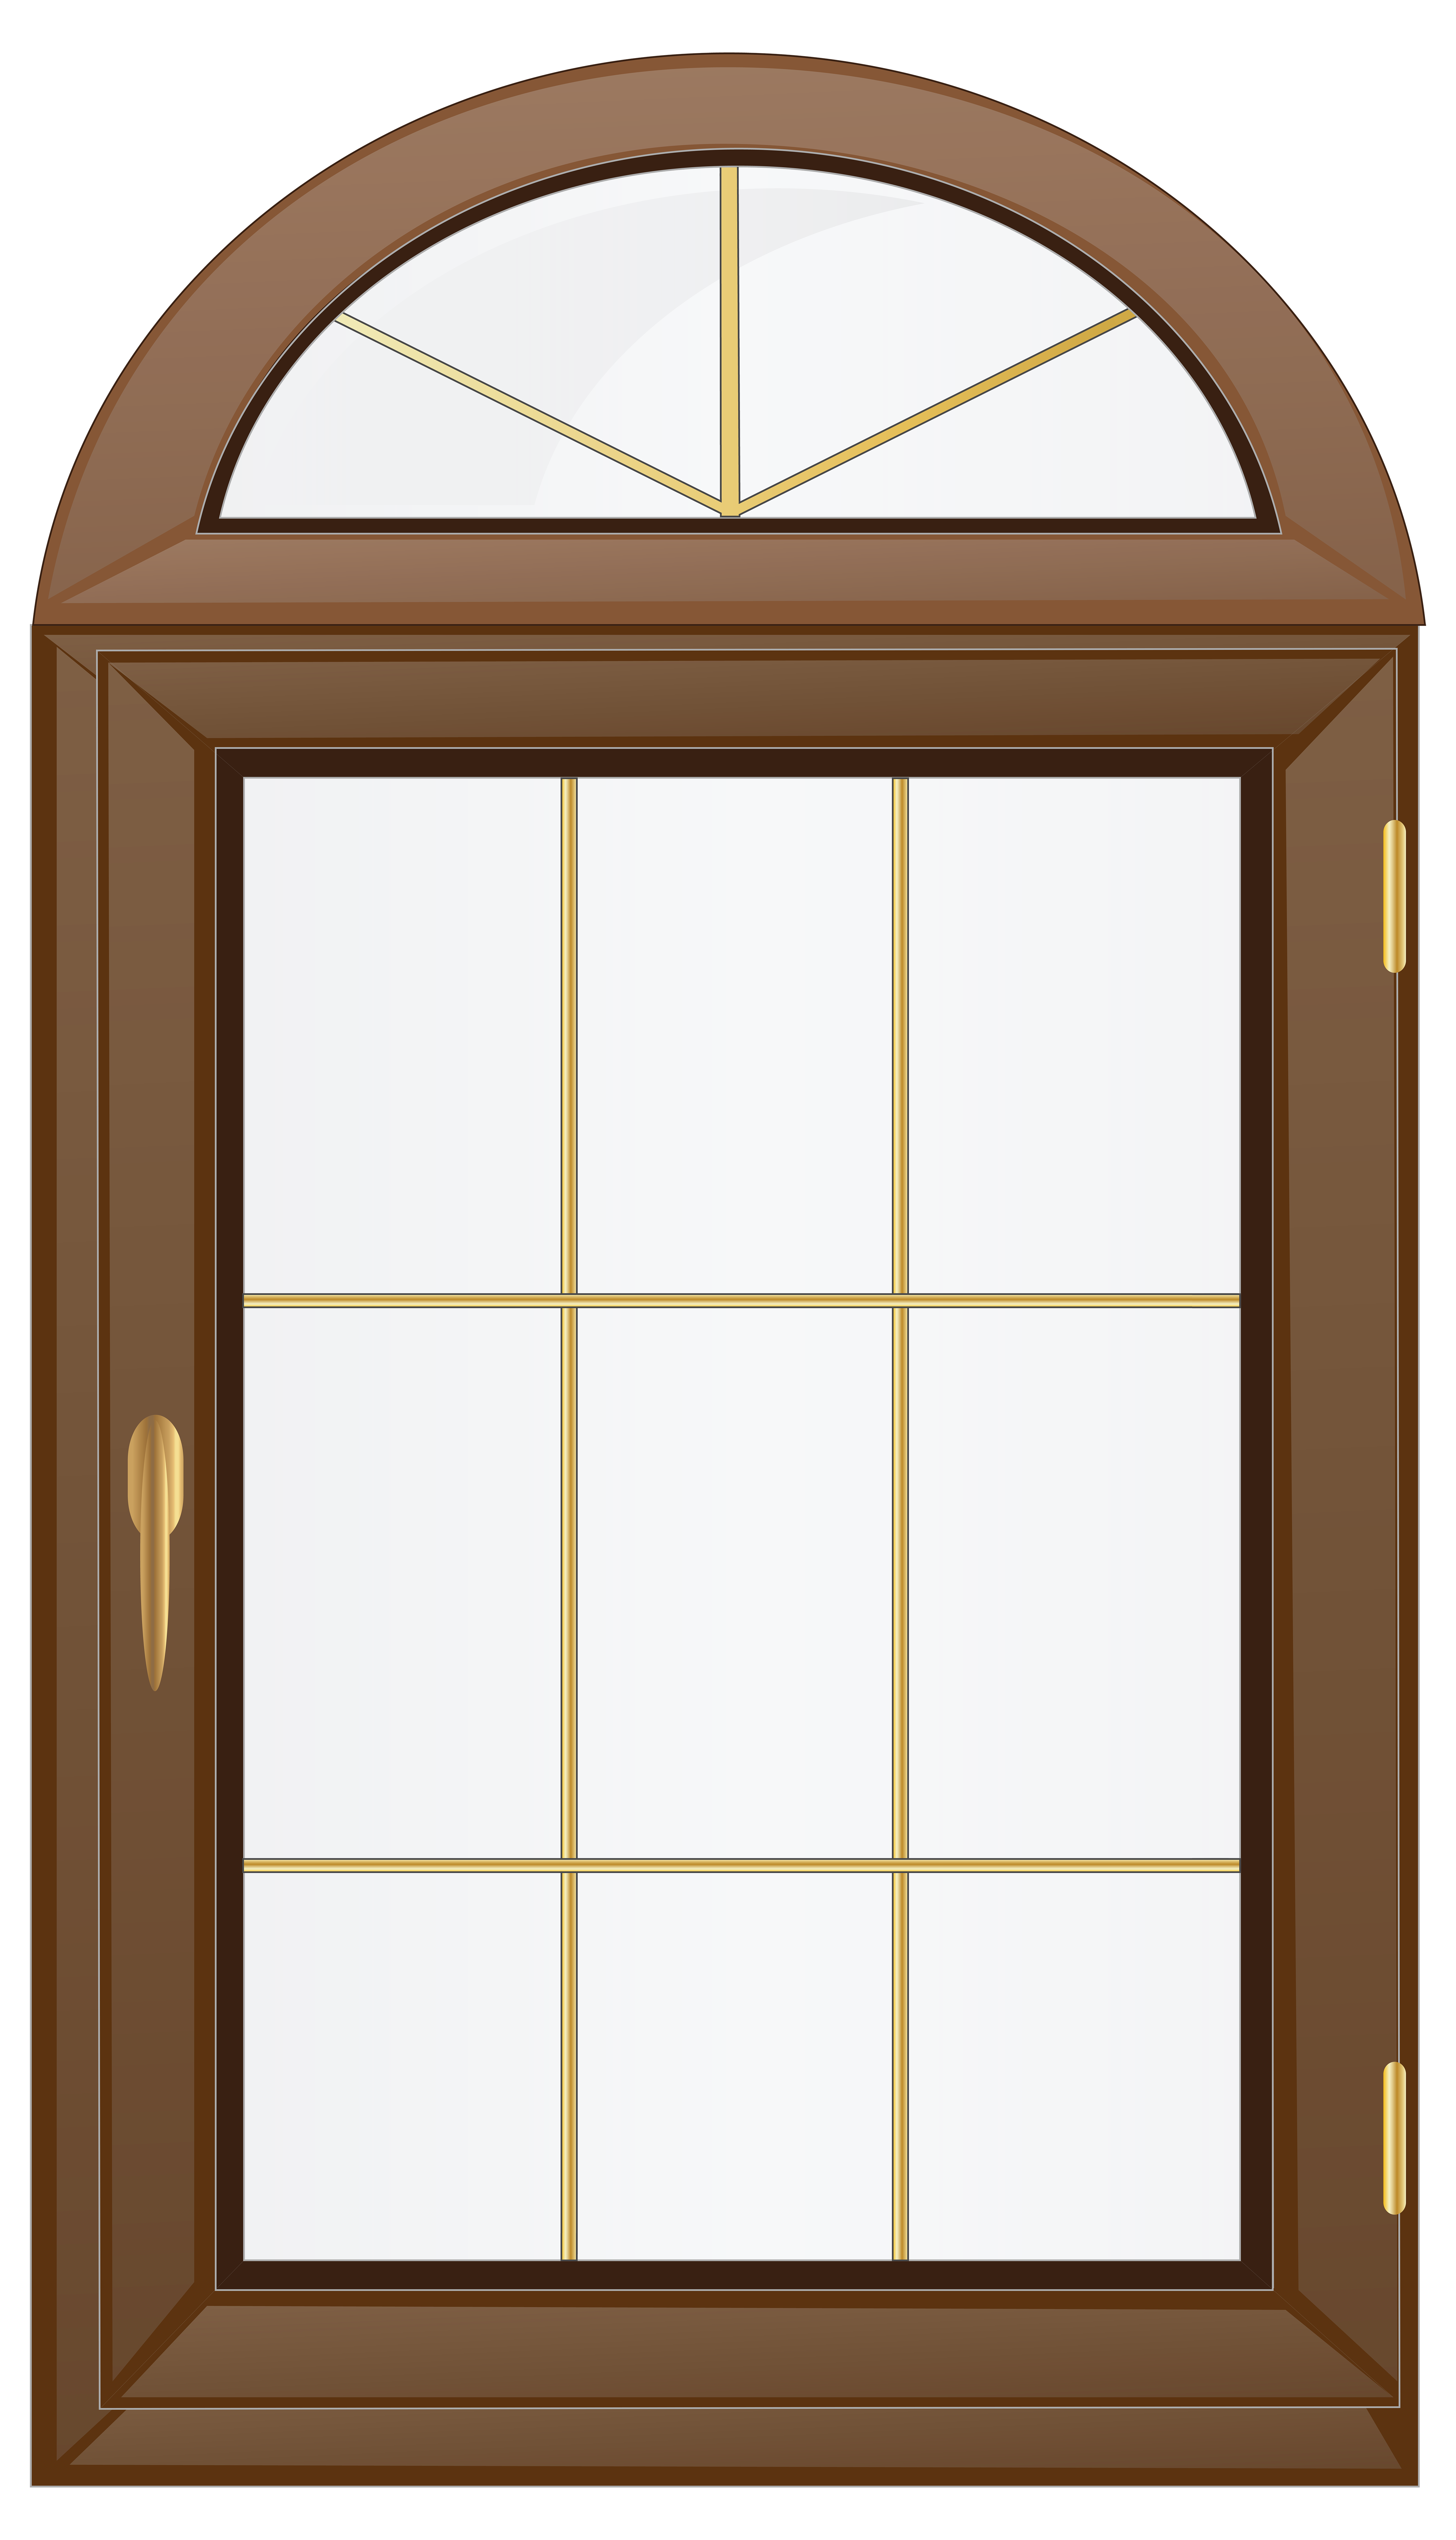 House window png. Transparent brown clip art